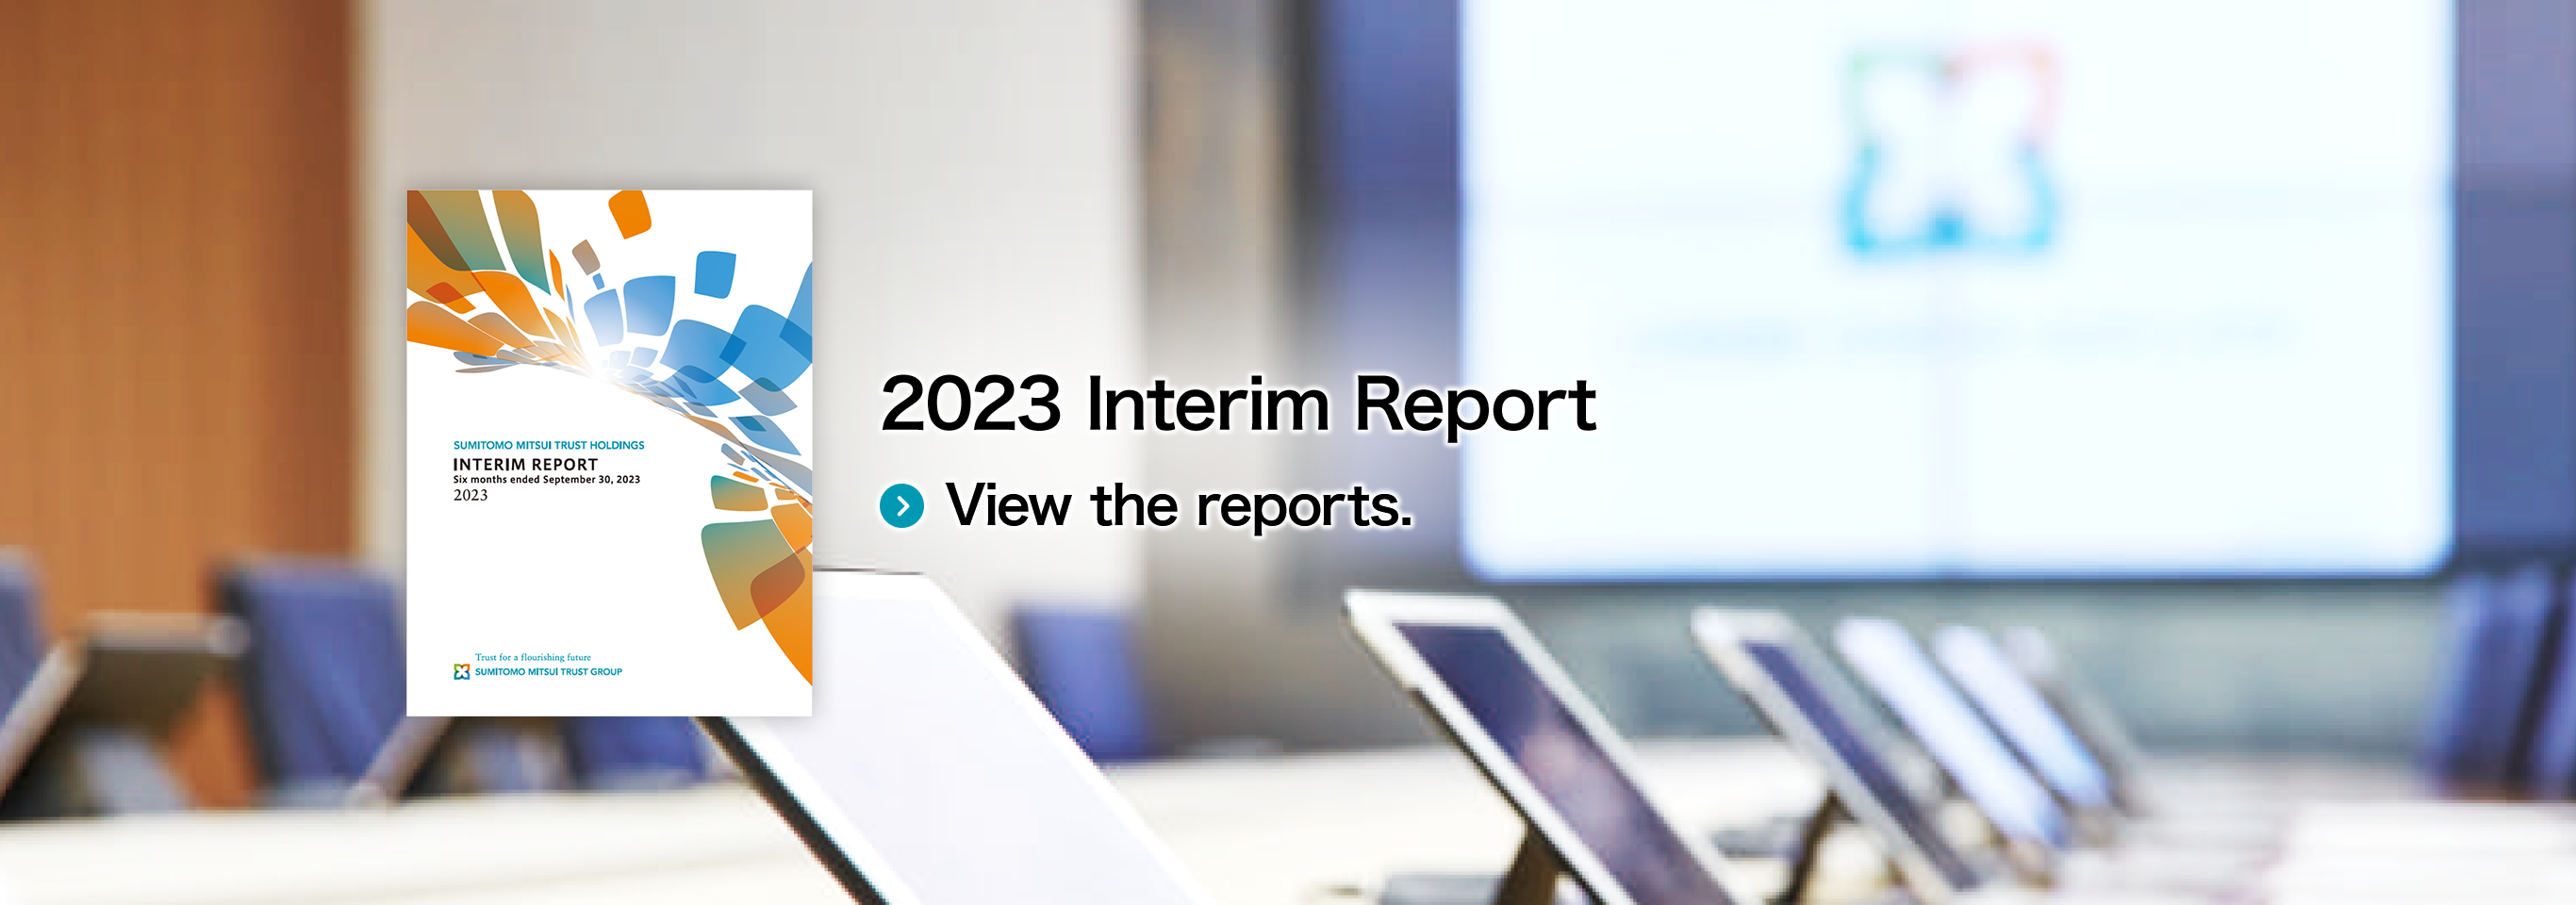 2023 Interim Report View the reports.